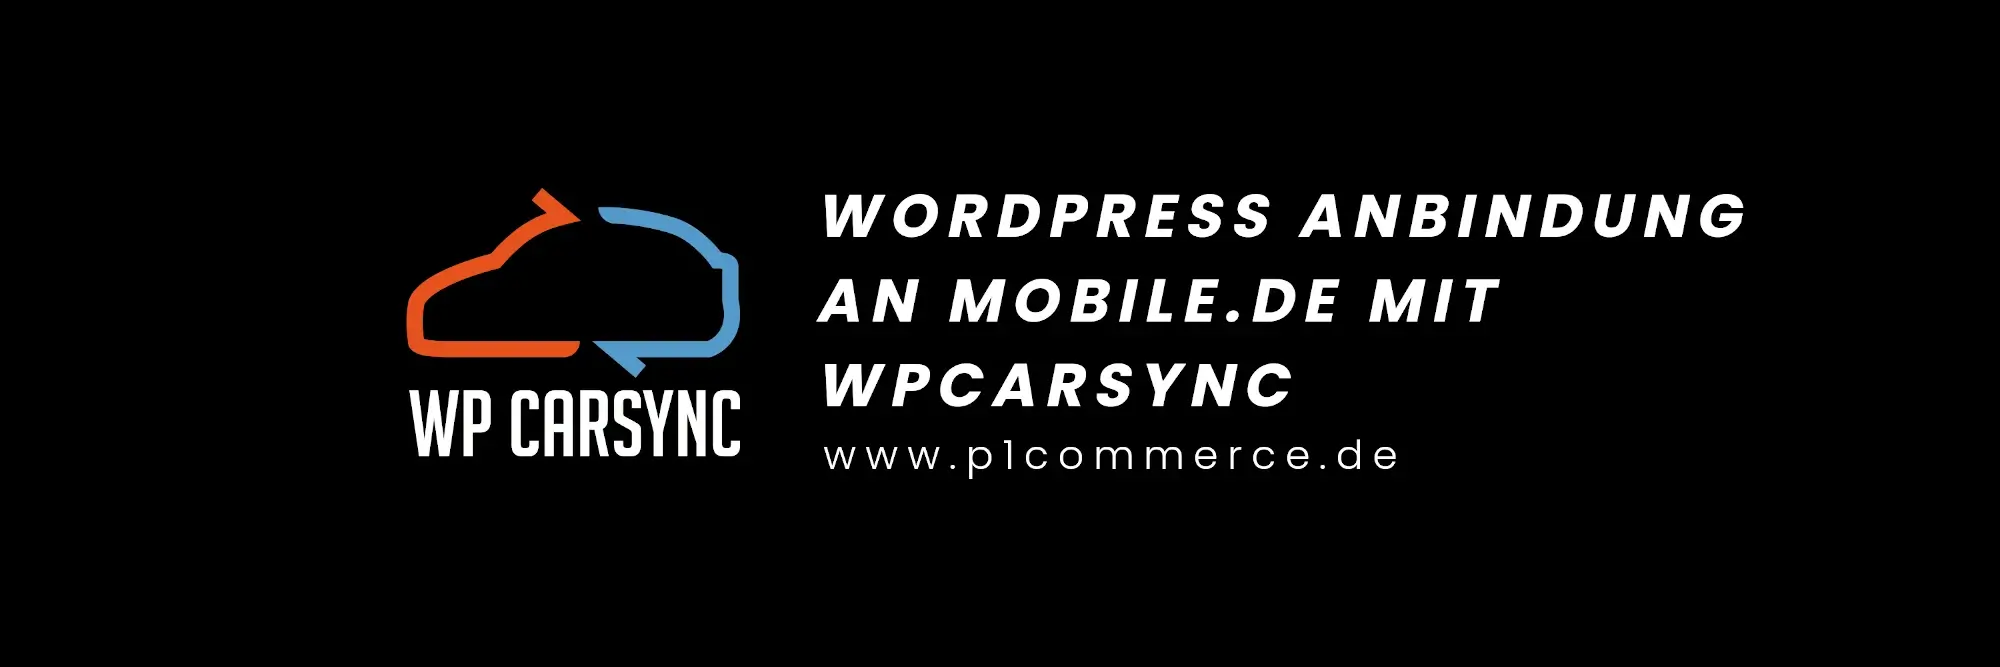 wpcarsync plugin wordpress p1 commerce